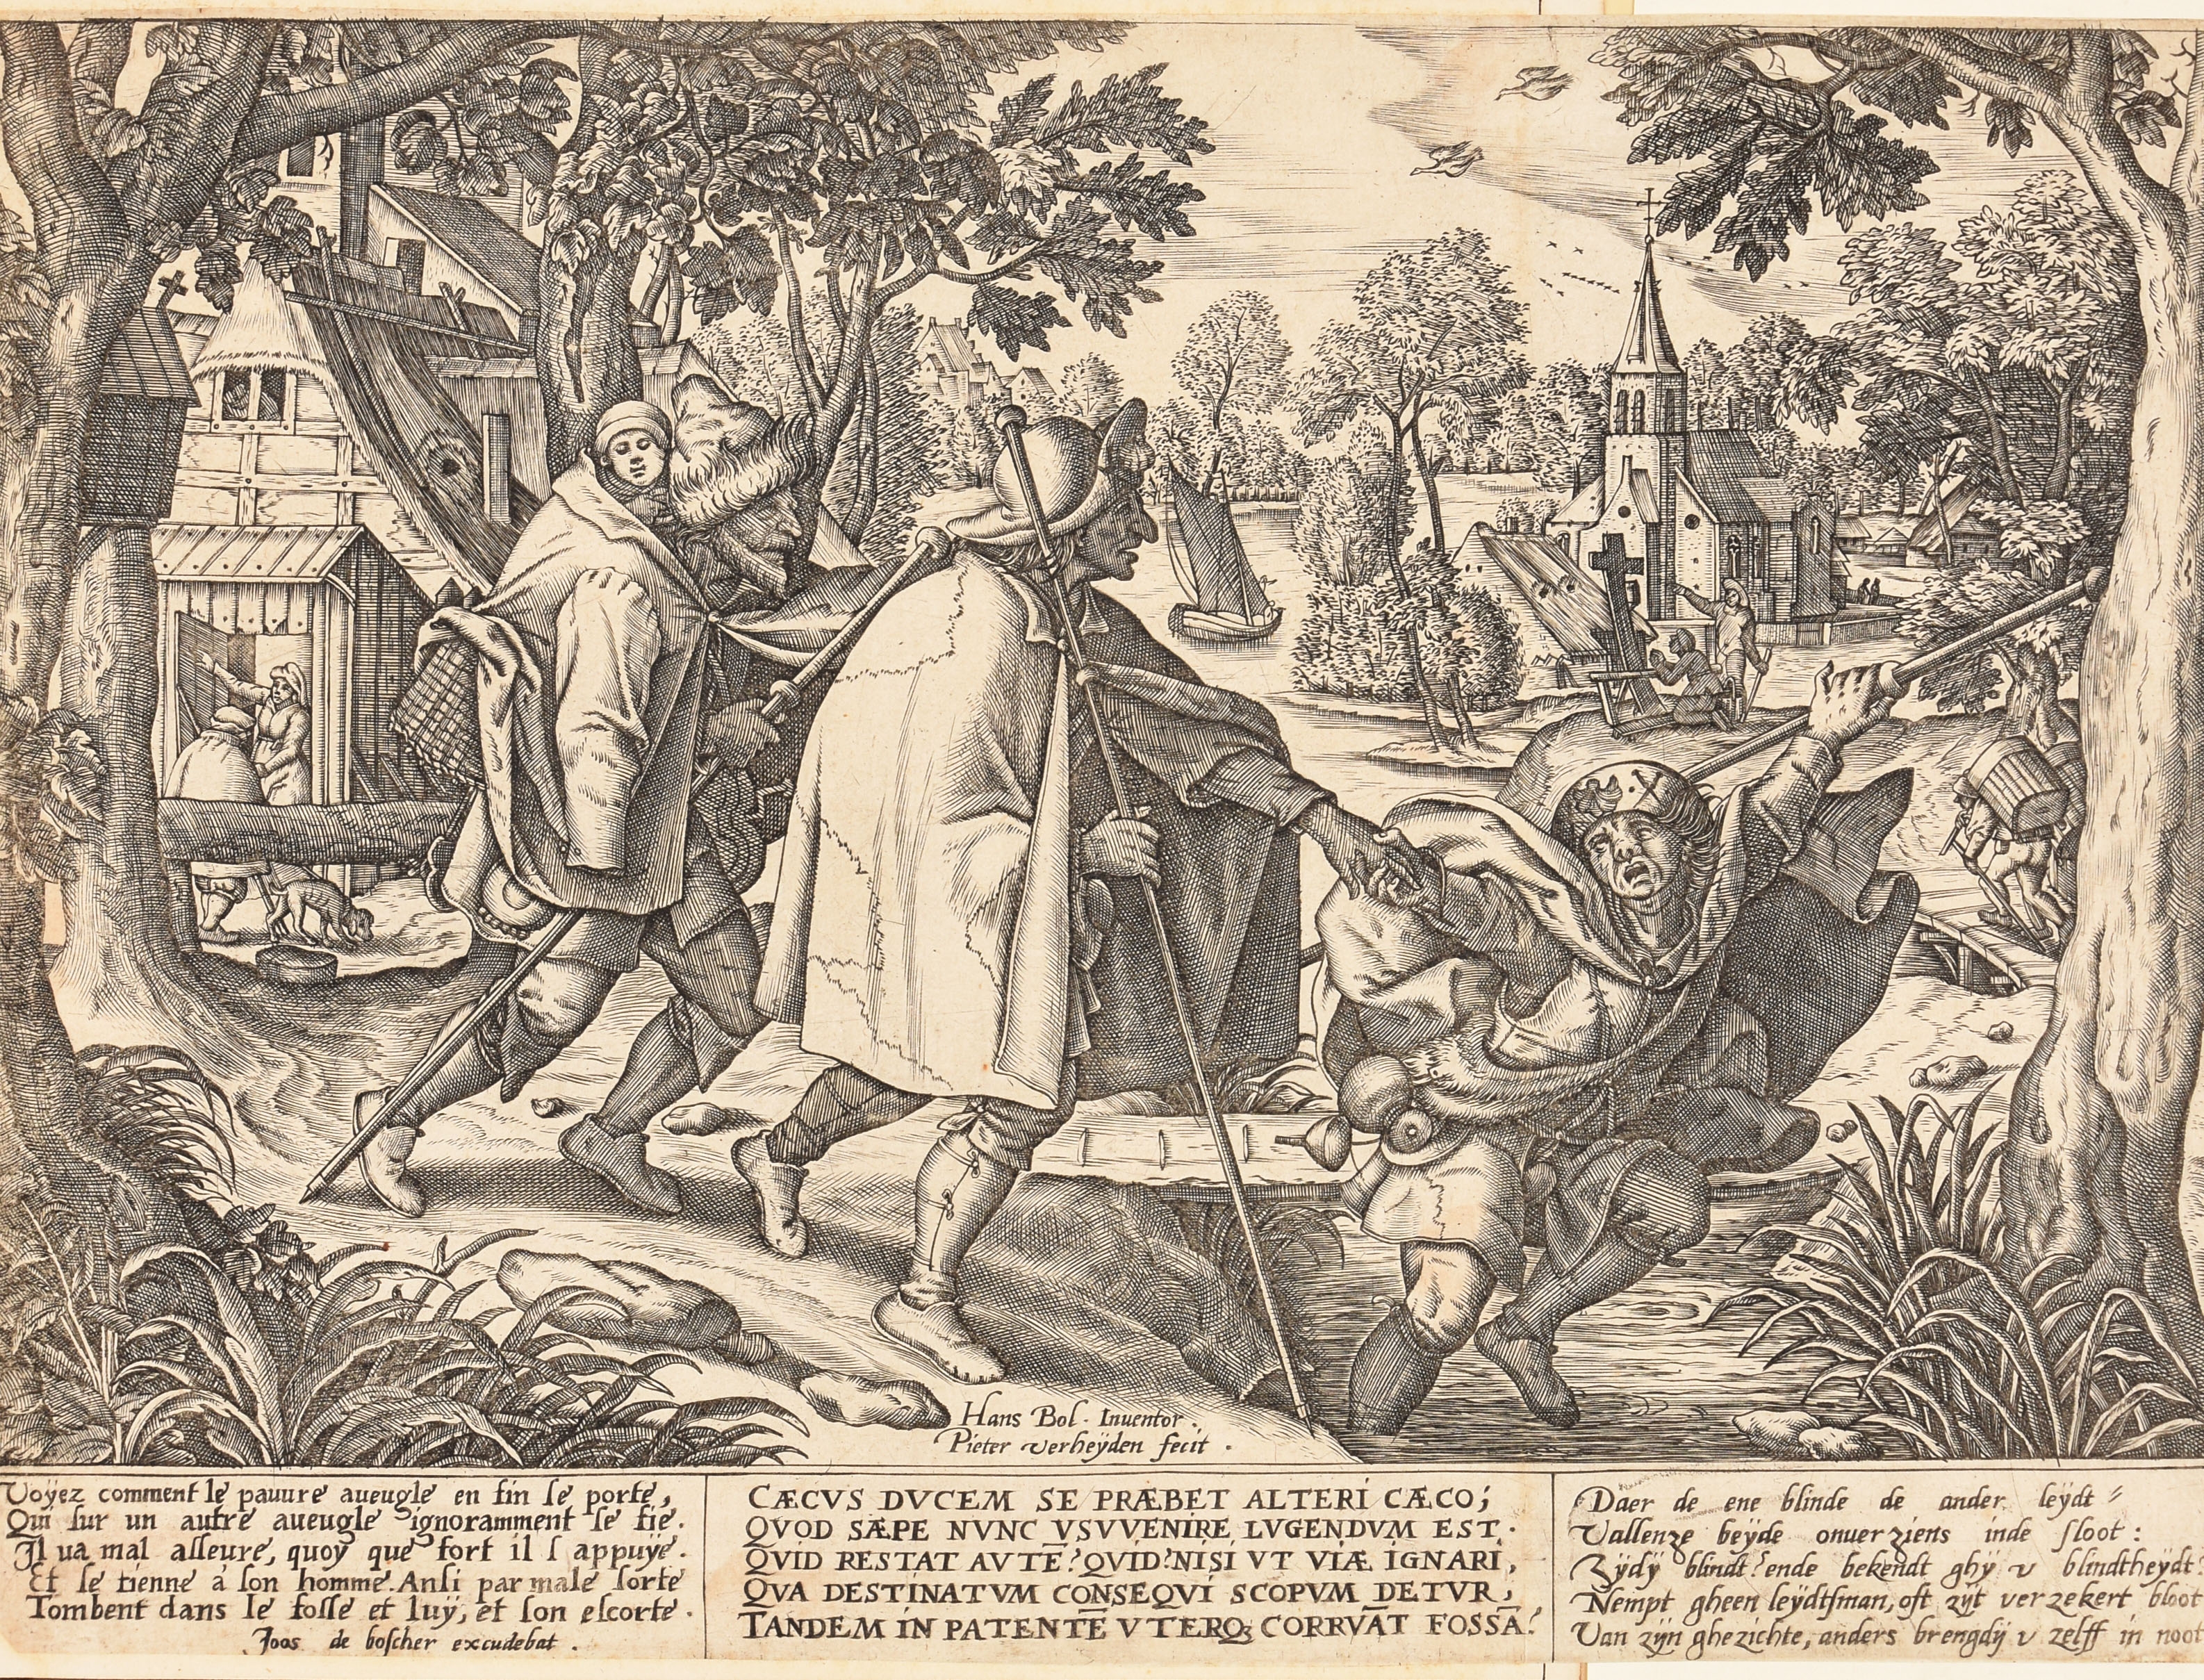 Artwork by Hans Bol, Pieter van der Heyden, The blind leading the blind, Made of Engraving, laid paper